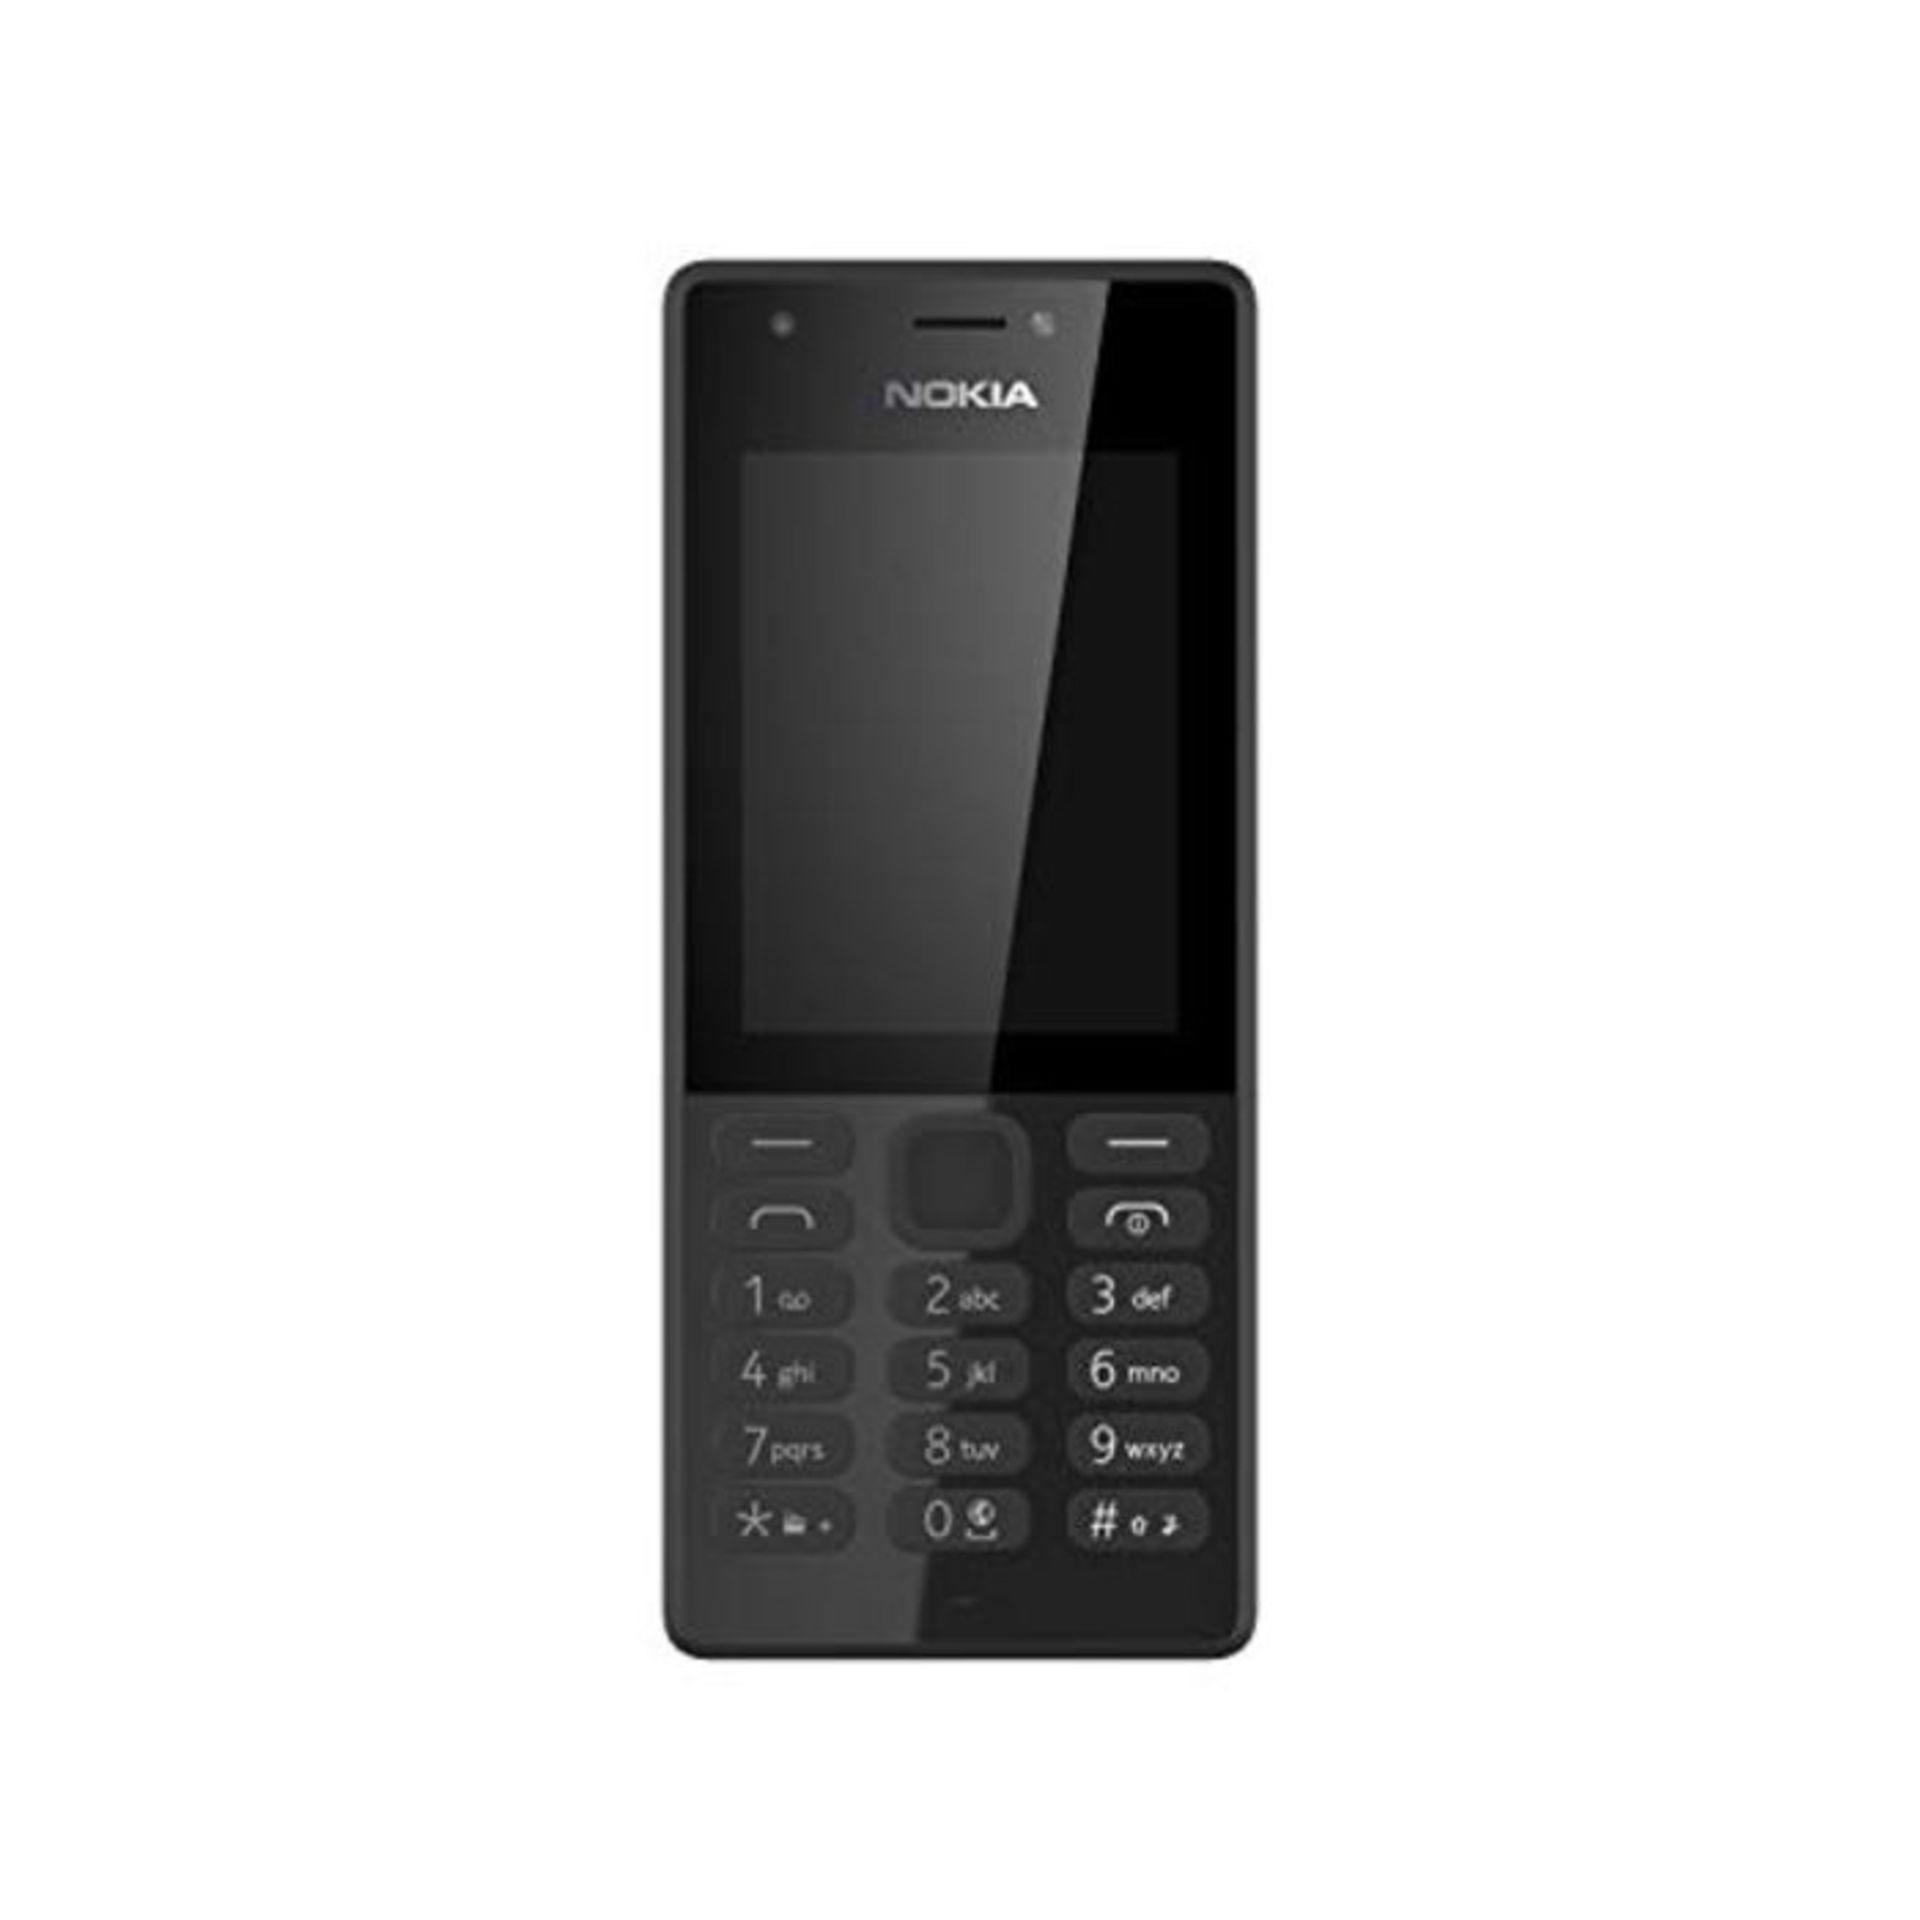 Nokia 216 Dual Sim Phone Case, 16 MB Internal Memory, Black - Guarantee Italy